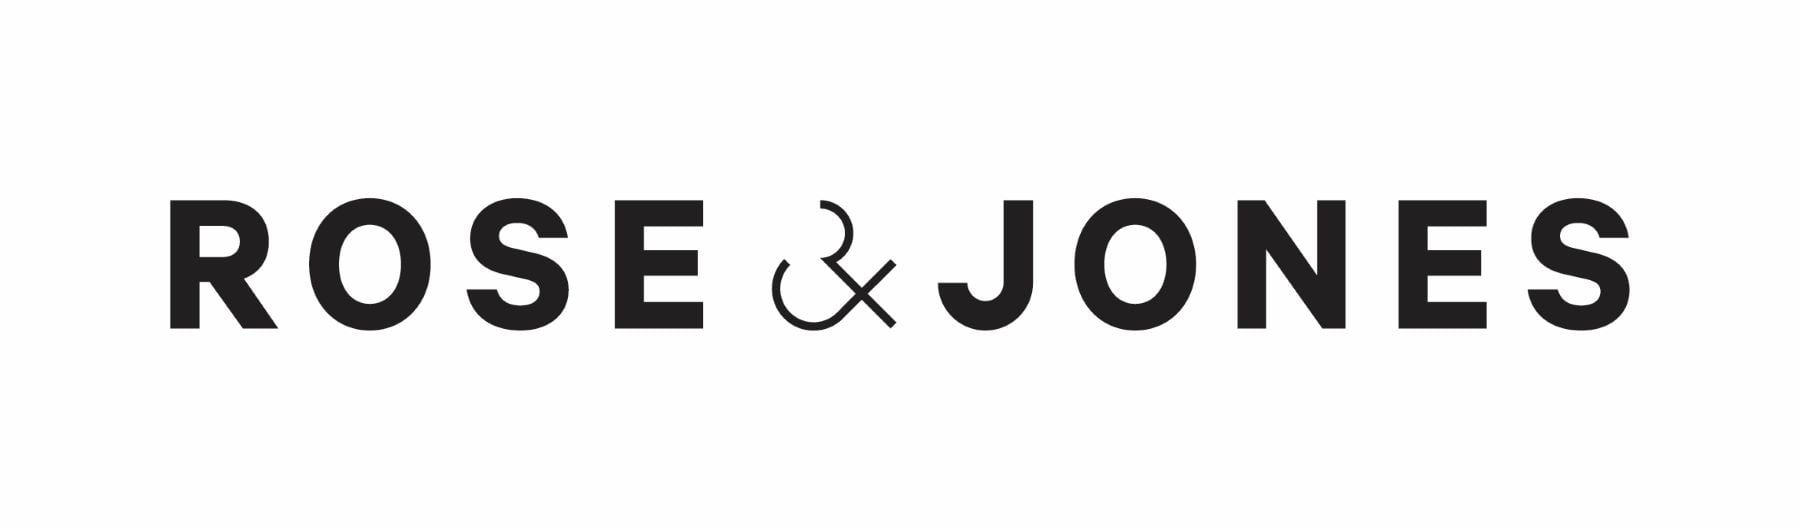 Rose & Jones Logo